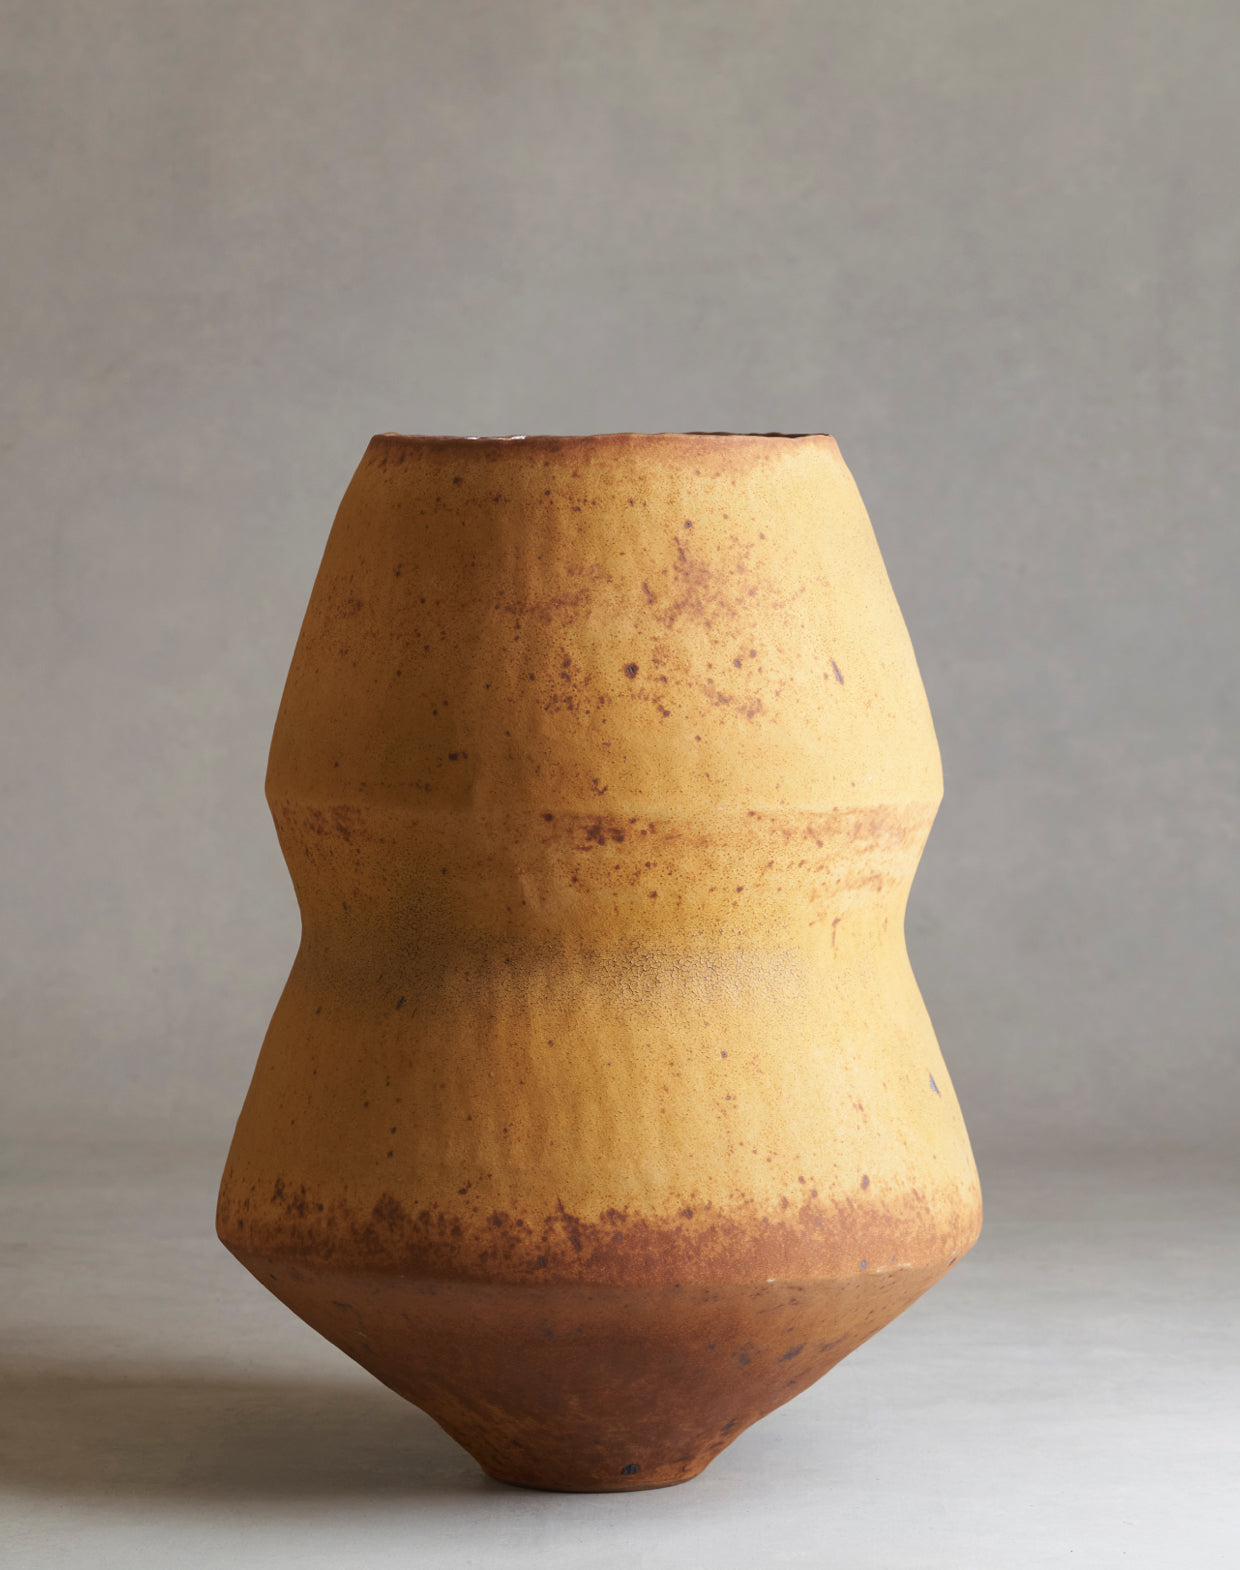 Rick Hintze Coiled Stoneware Vessel, "Untitled" No. 06